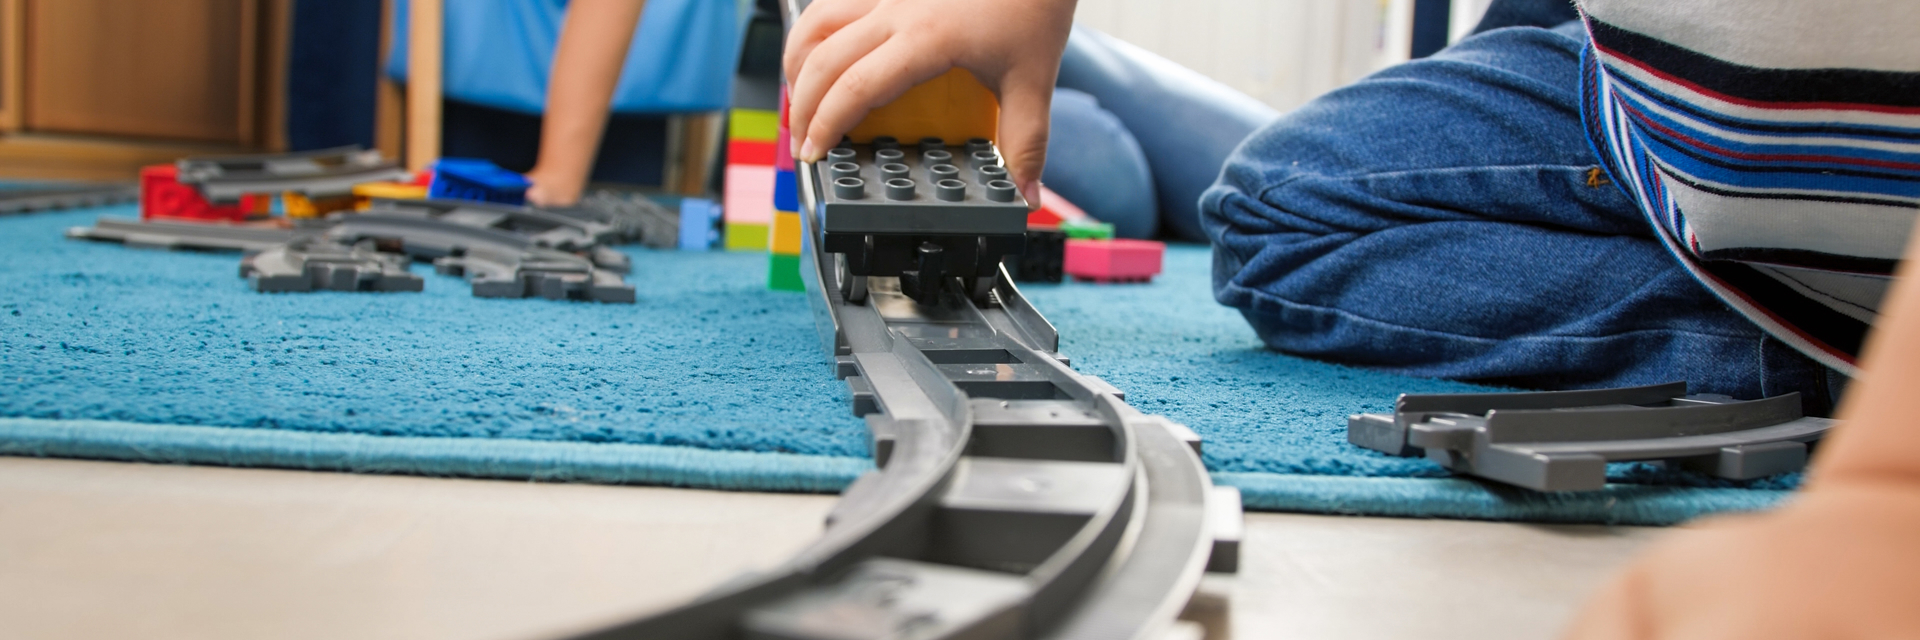 Børn bygger togbane